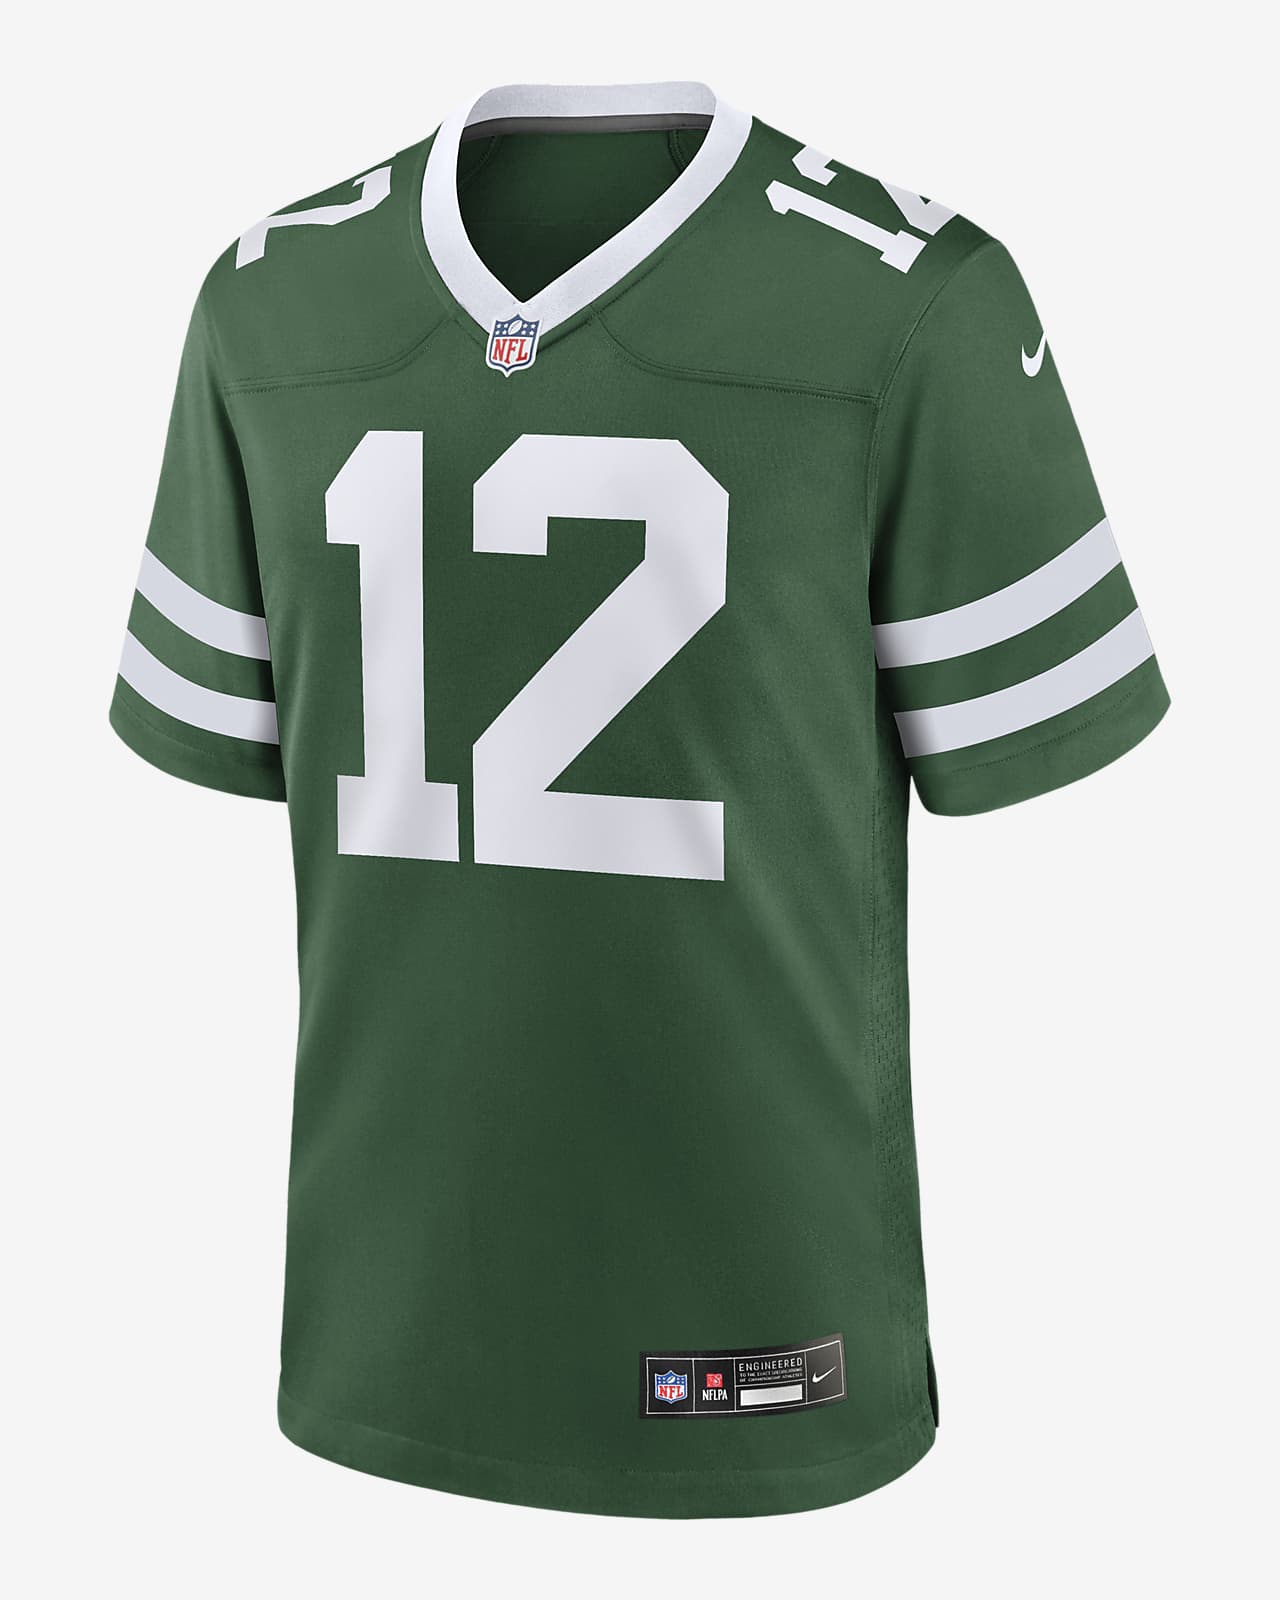 Jersey de fútbol americano Nike de la NFL Game para hombre Joe Namath New York Jets